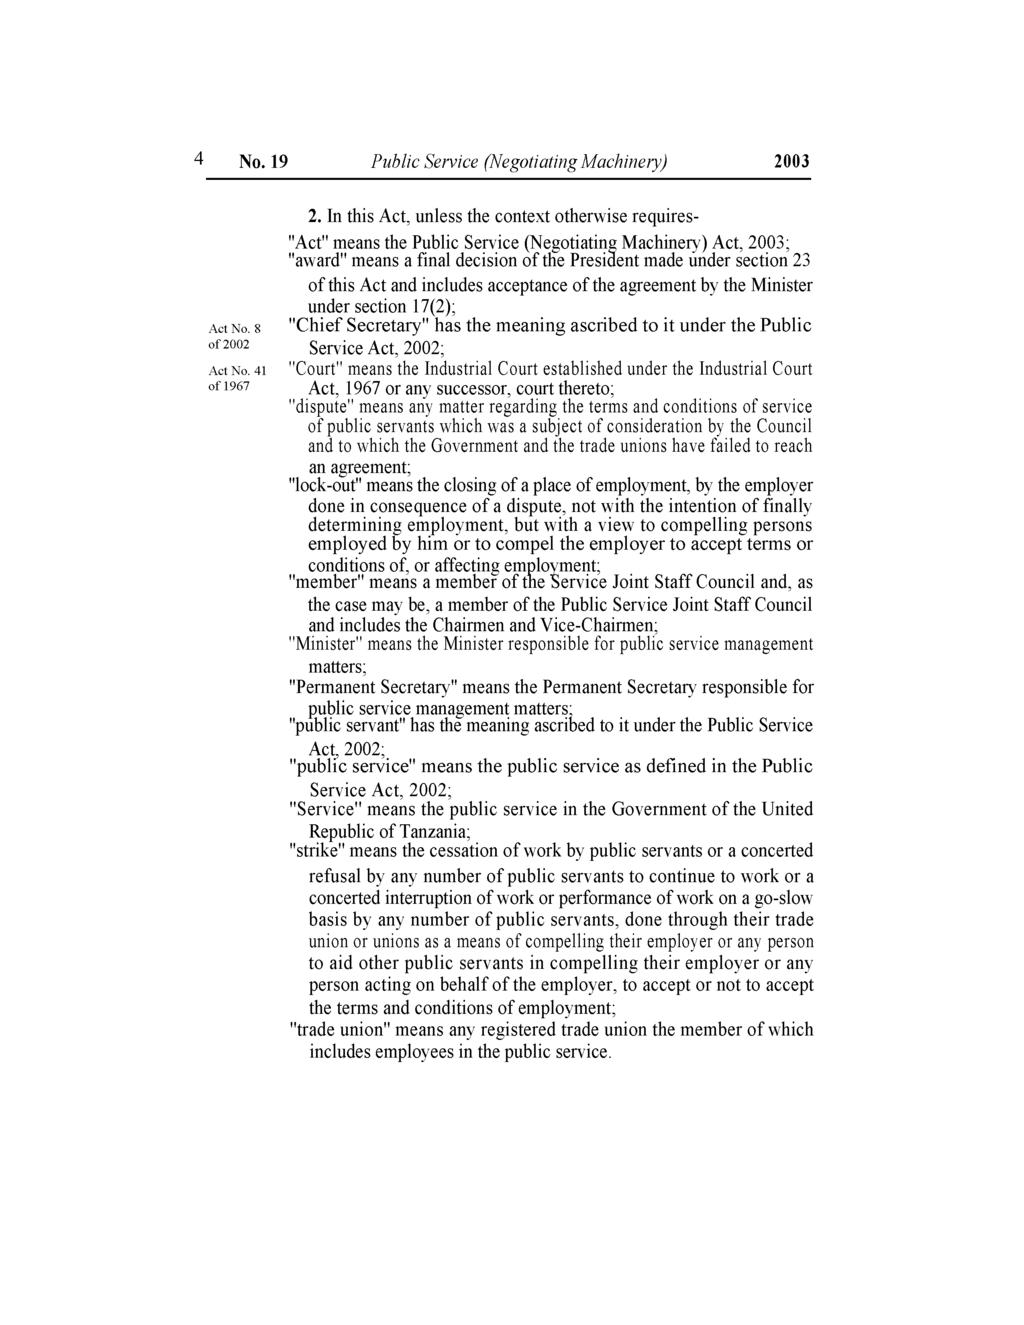 4 No. 19 Public (Negotiating Machinery) 2003 Act No. 8 of2002 Act No. 41 of 1967 2.